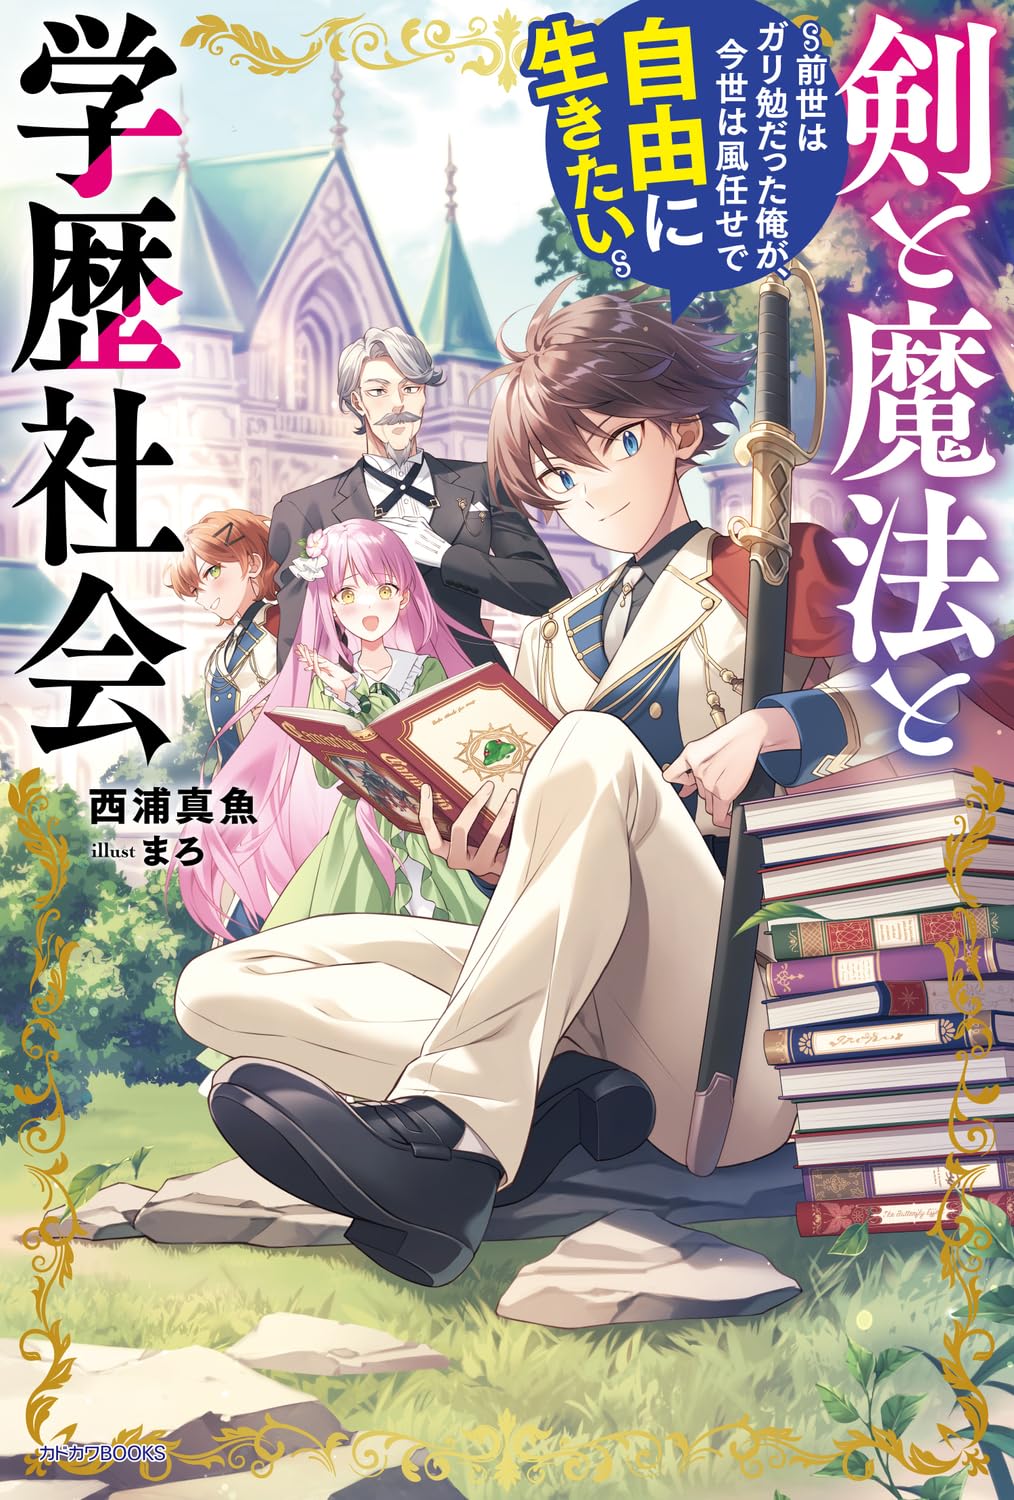 Watashi no Shiawase na Kekkon (WN) - Novel Updates